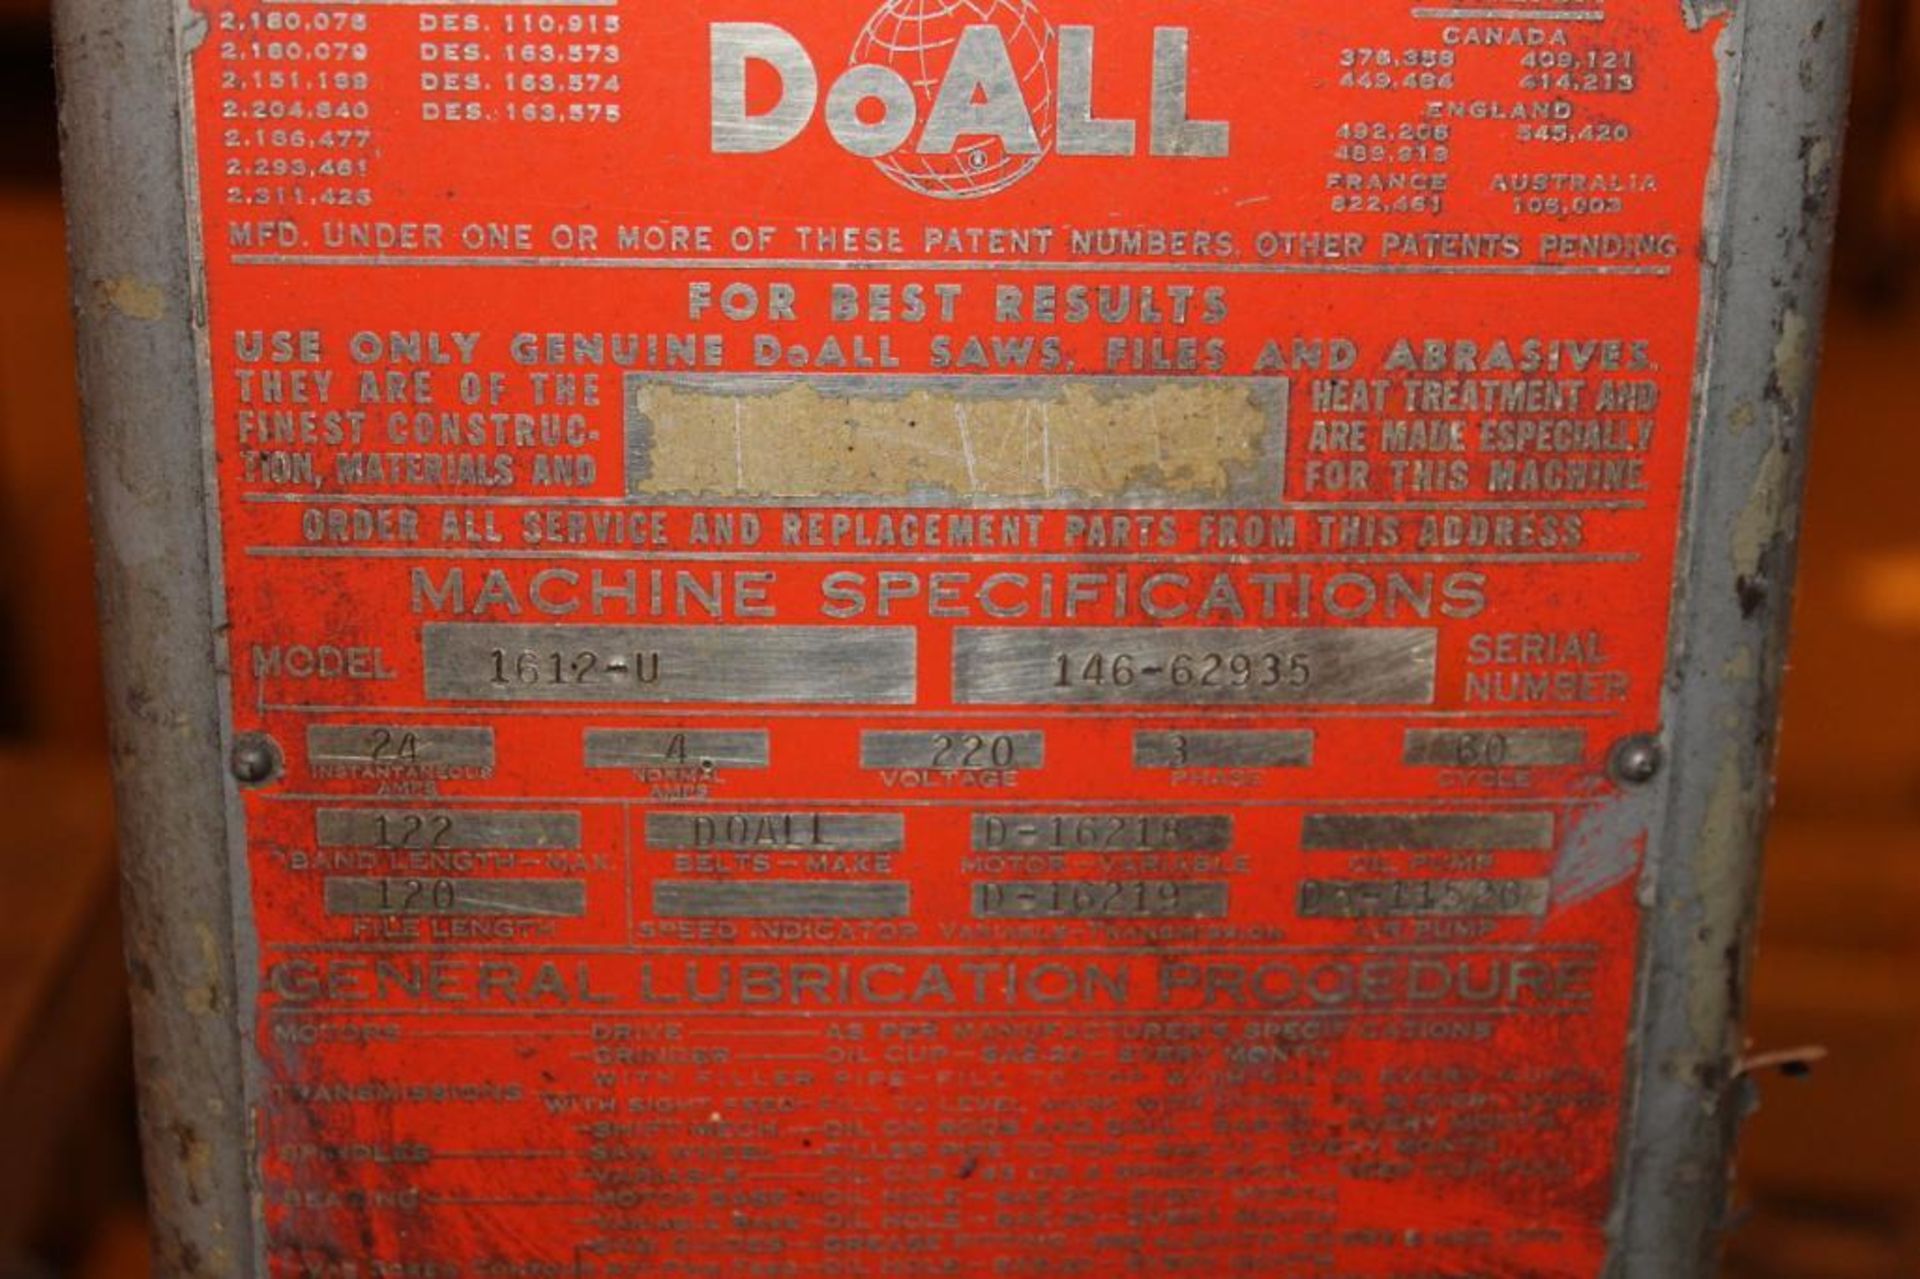 1969 DoALL Model 1612-U Vertical Band Saw - Image 5 of 5